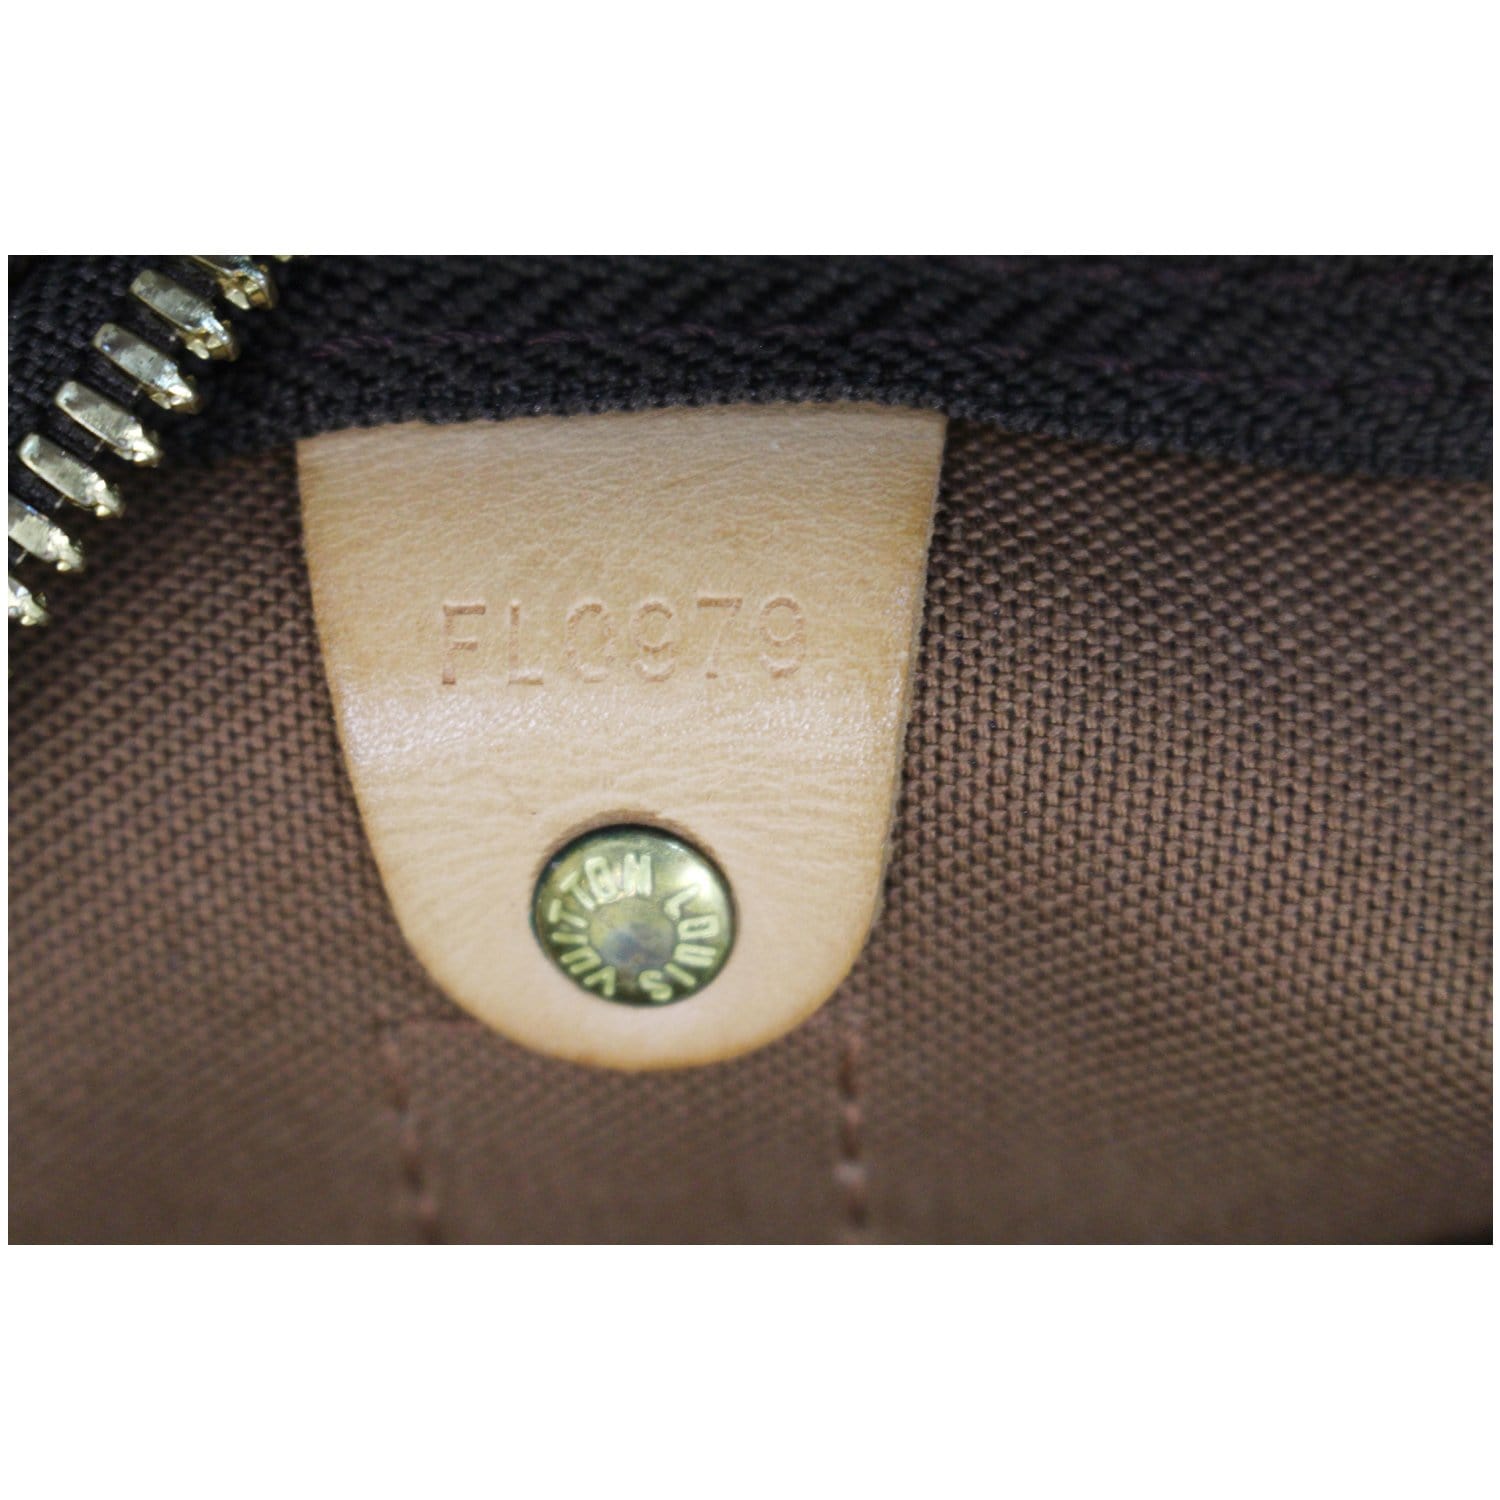 LV Louis Vuitton - Keepall 50 Large Duffle Bag - Brown Monogram Travel -  BougieHabit